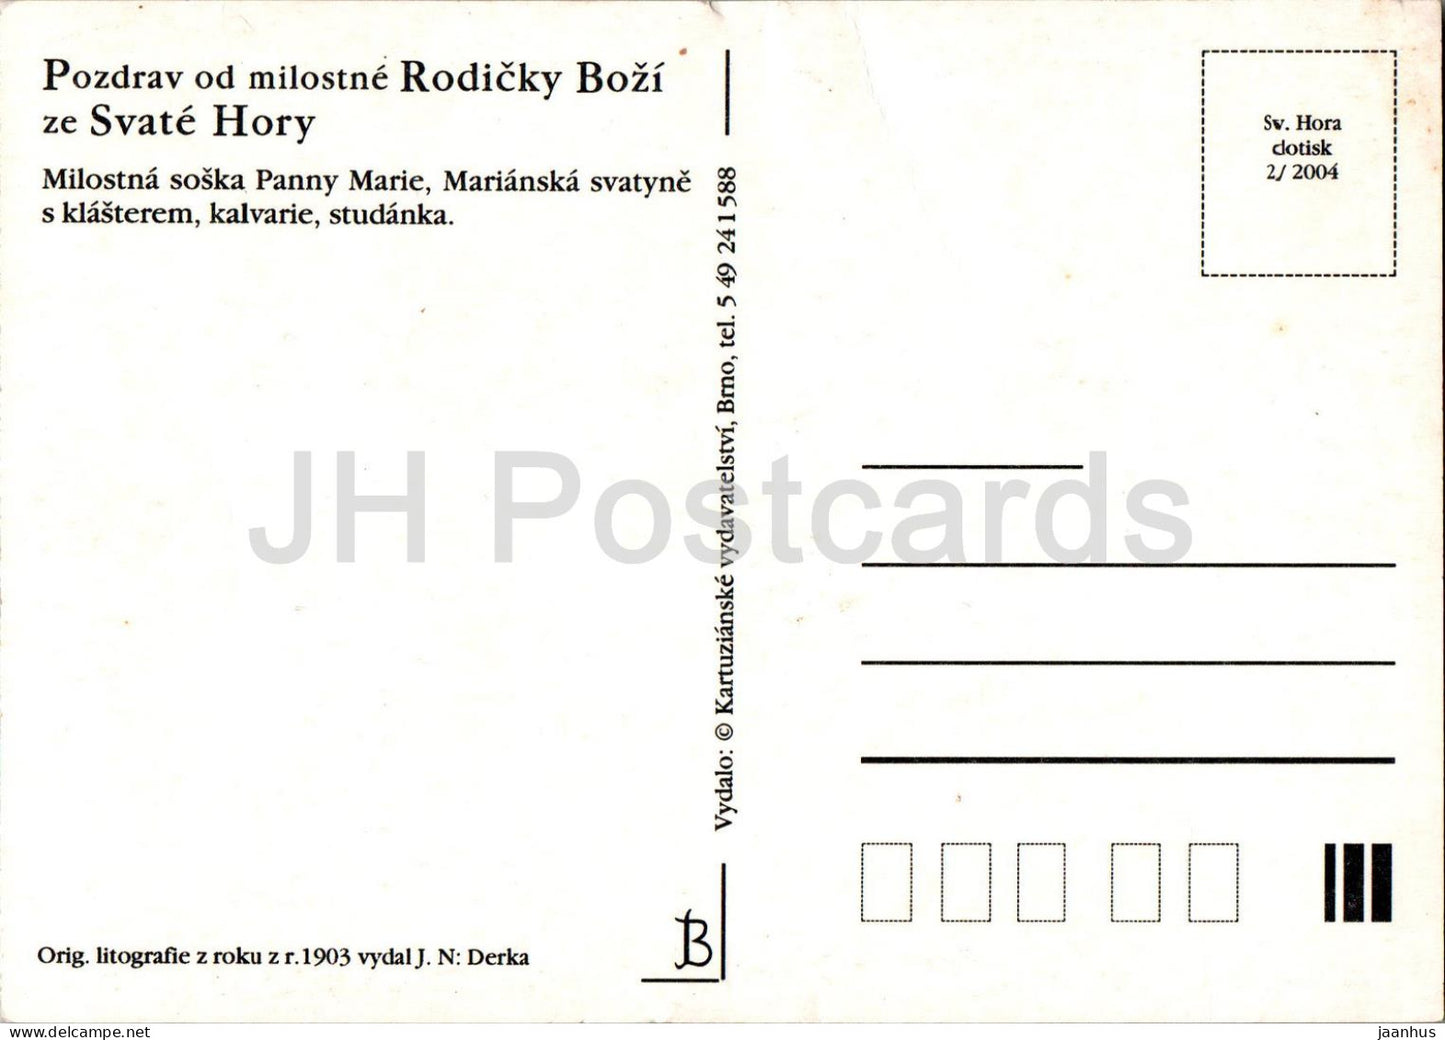 Pozdrav od milostne Rodicky Bozi - ze Svate Hory u Pribrami - REPRODUCTION ! - 2004 - République tchèque - inutilisé 